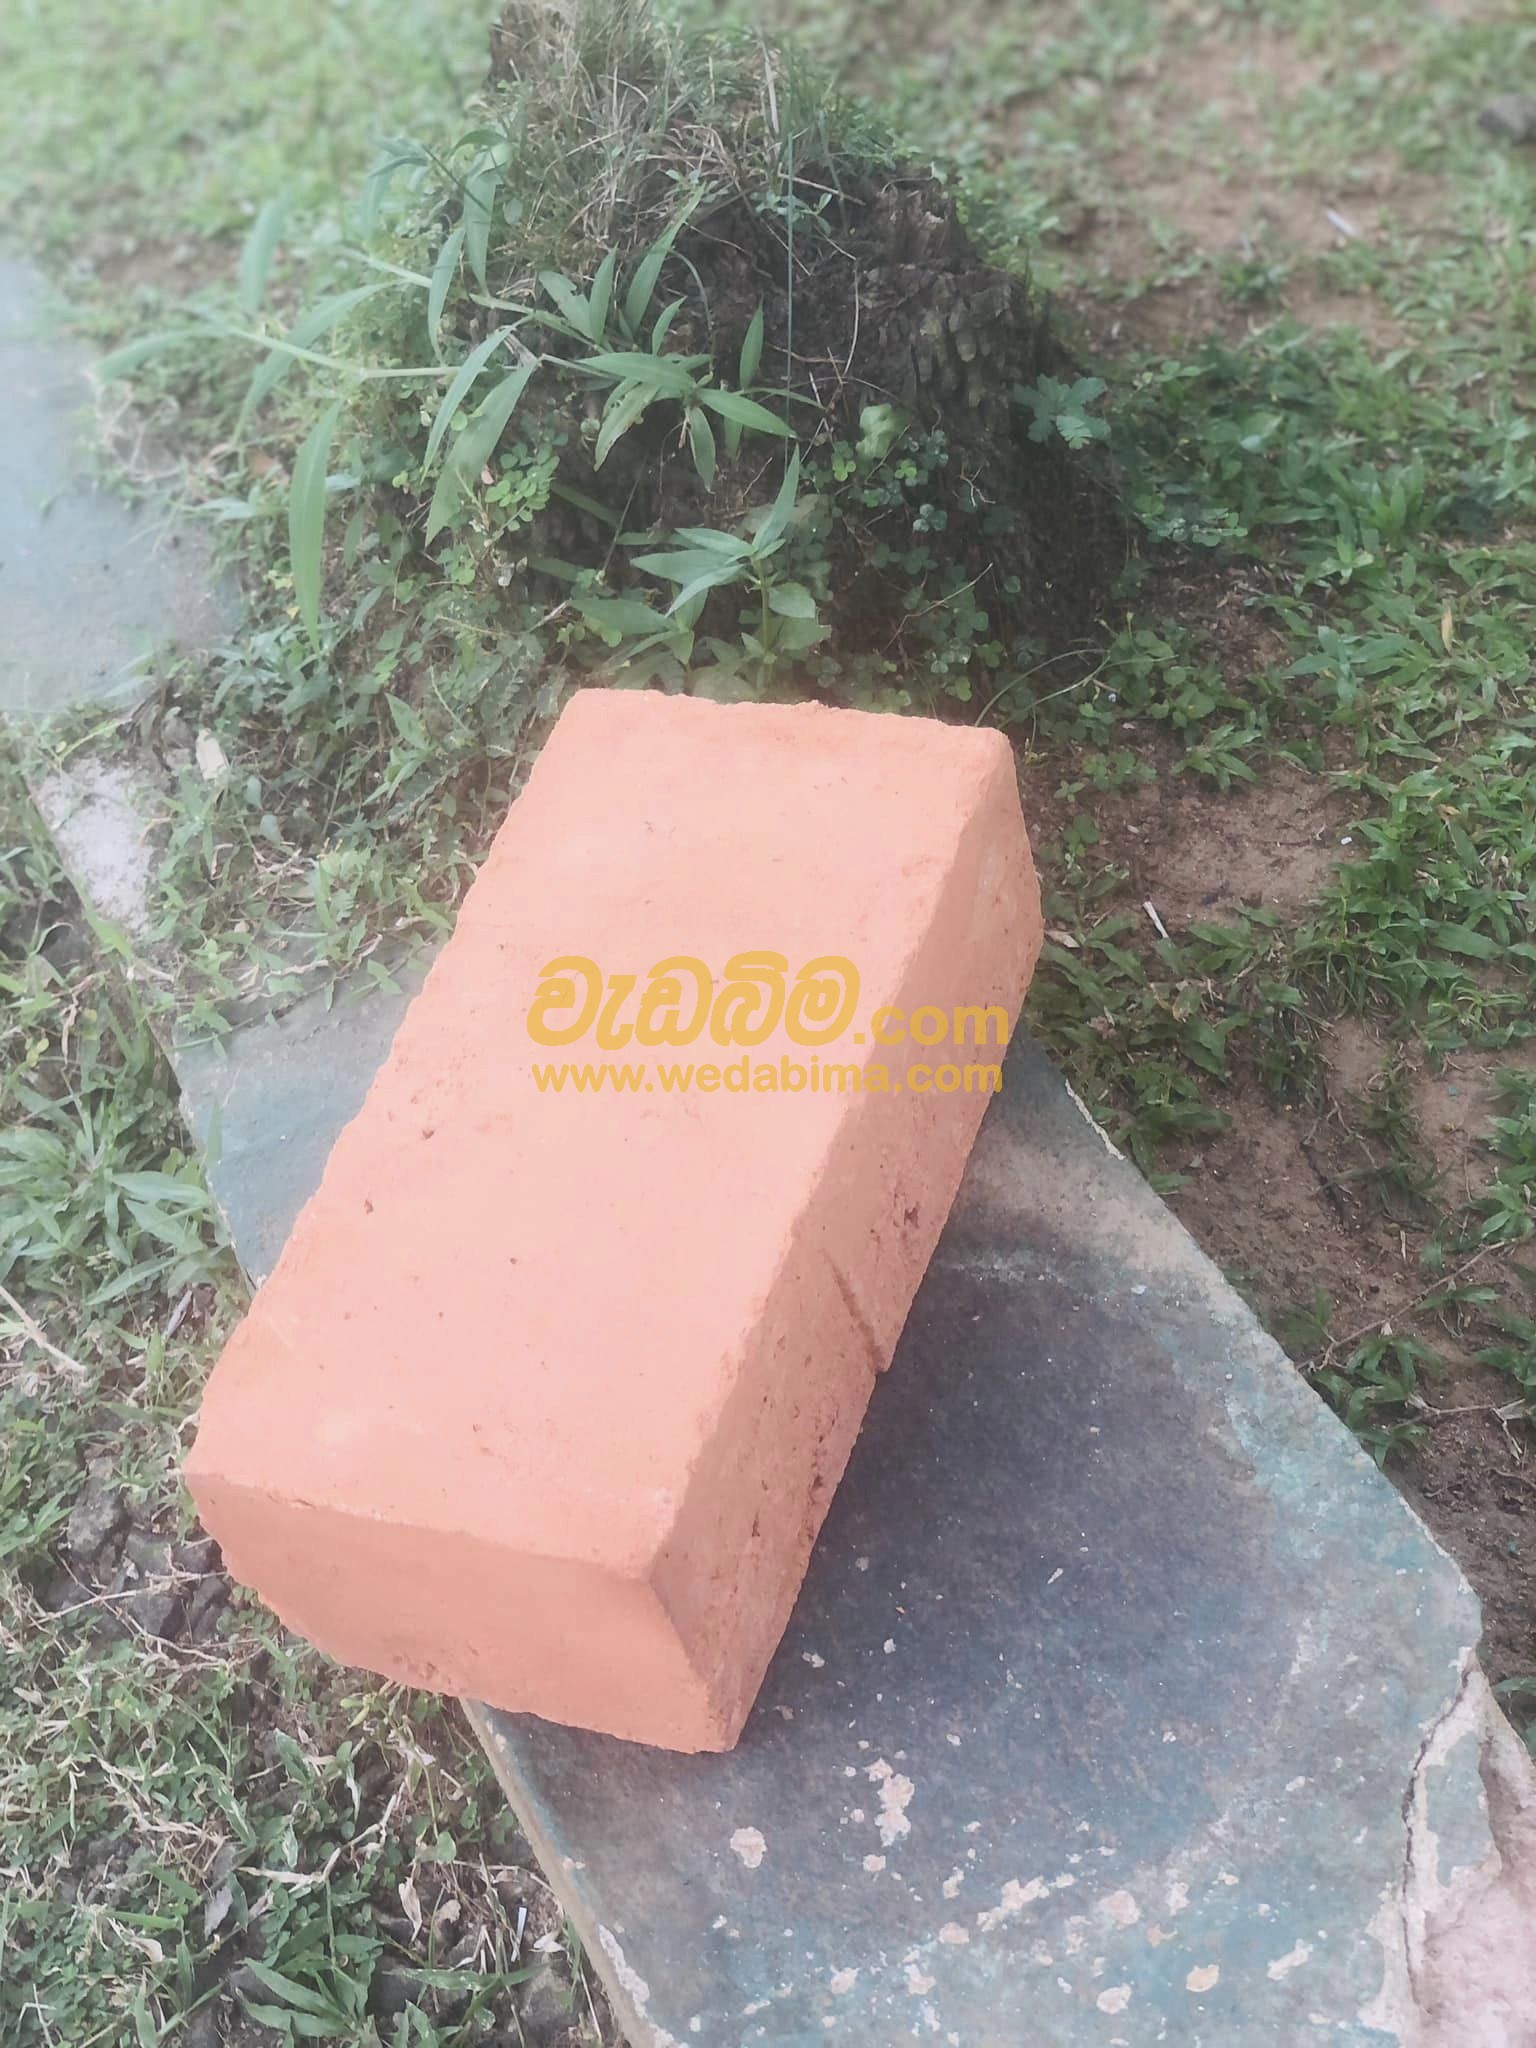 brick suppliers in sri lanka